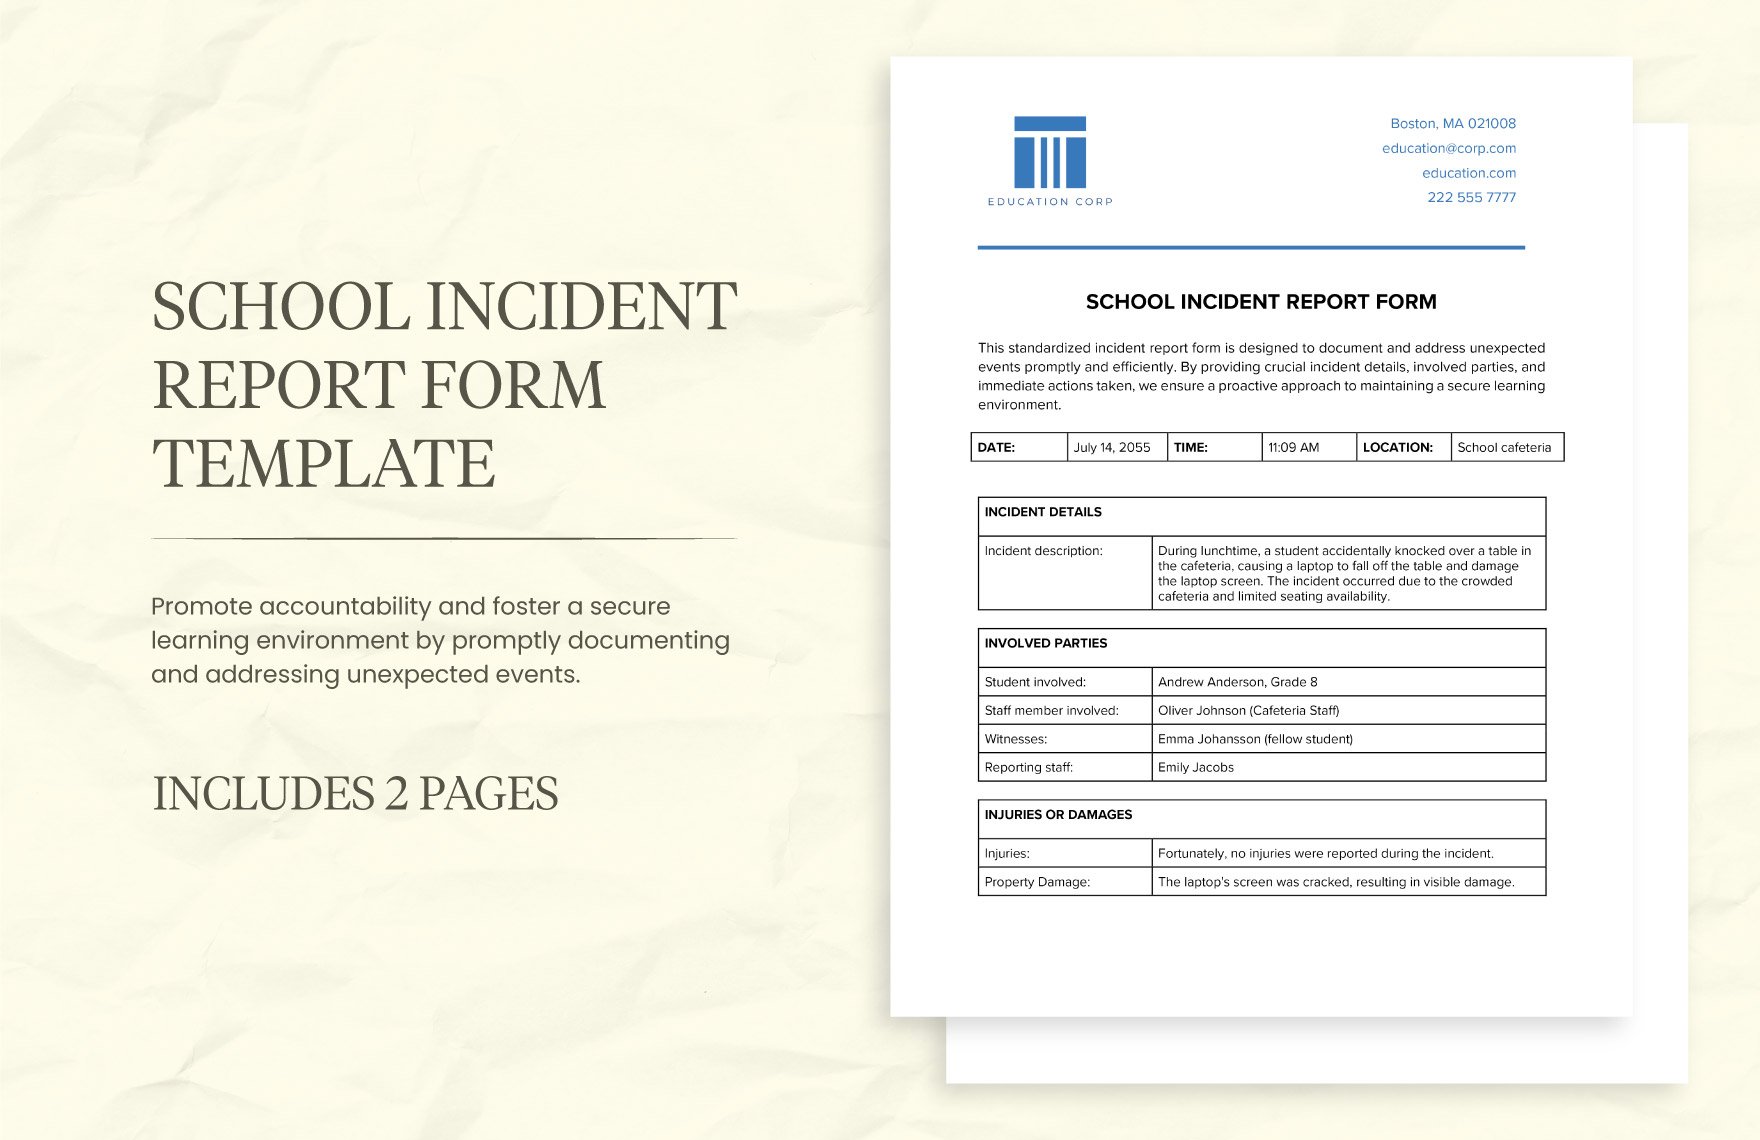 School Incident Report Form Template in Word, Google Docs, PDF